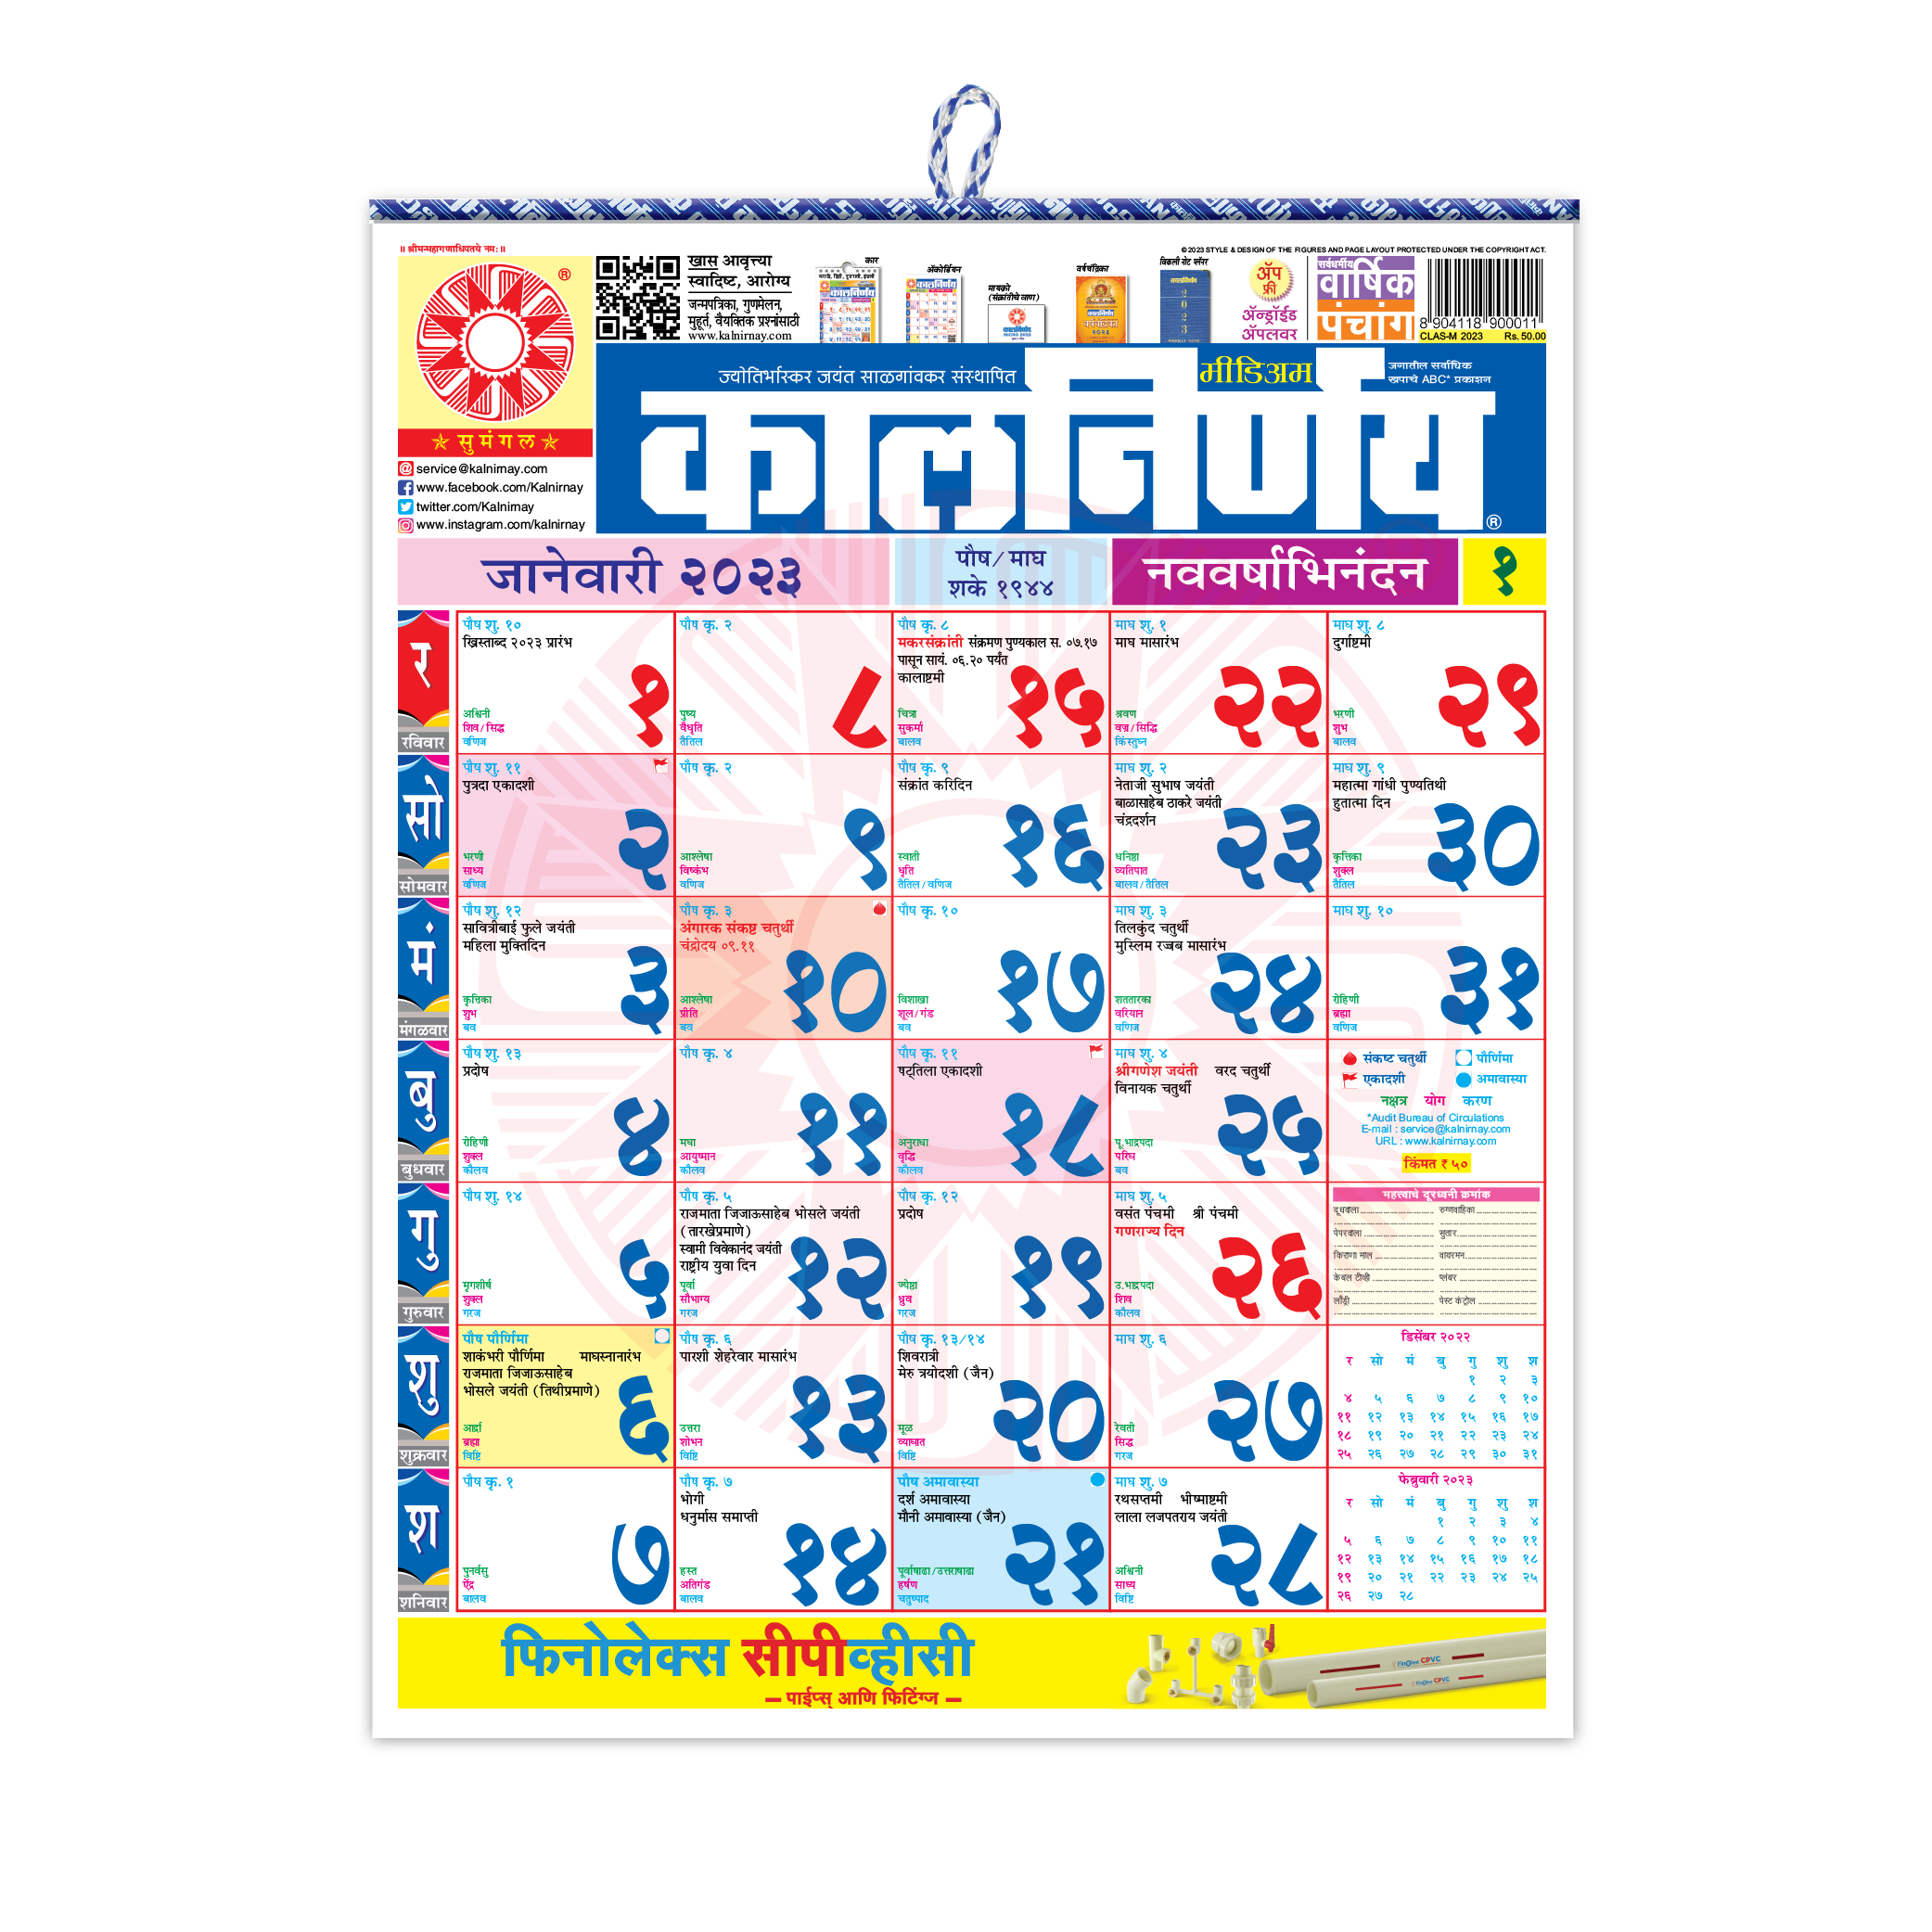 marathi-calendar-ubicaciondepersonas-cdmx-gob-mx